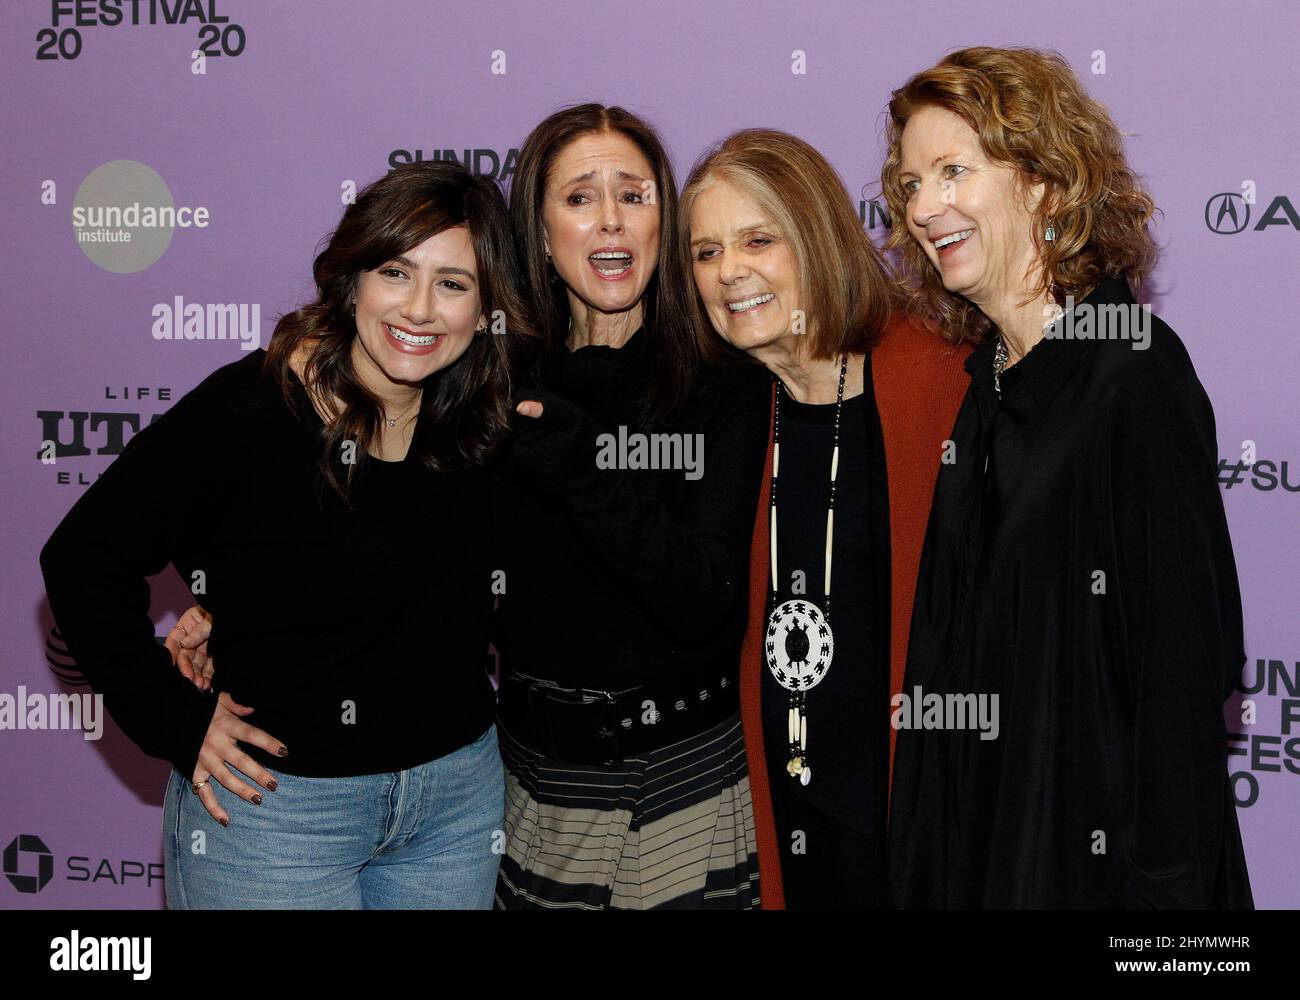 Alex Saks, Julie Taymor, Gloria Steinem, Lynn Hendee alla prima di 'The Glorias' durante il Sundance Film Festival 2020 tenuto al Teatro Eccles il 26 gennaio 2020 a Park City, Utah. Foto Stock